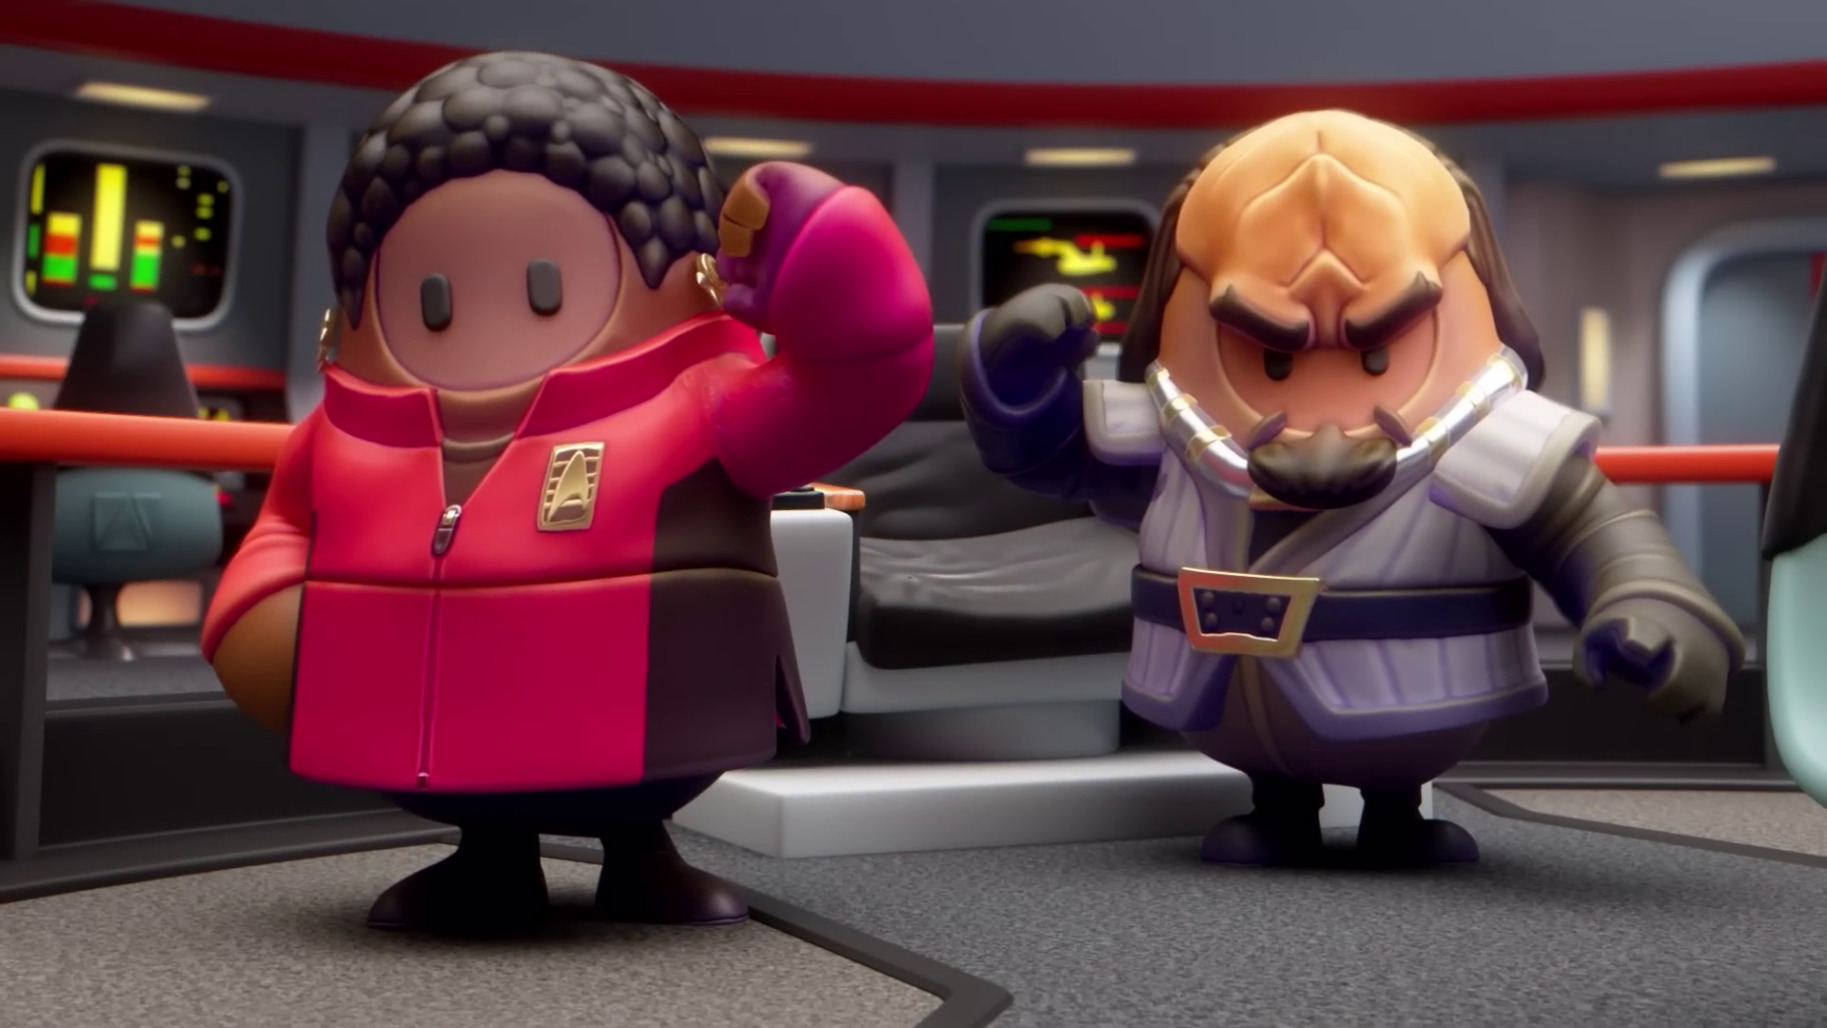 Fall Guys Star Trek Crossover - Uhura and Worf Costumes on the Enterprise Bridge